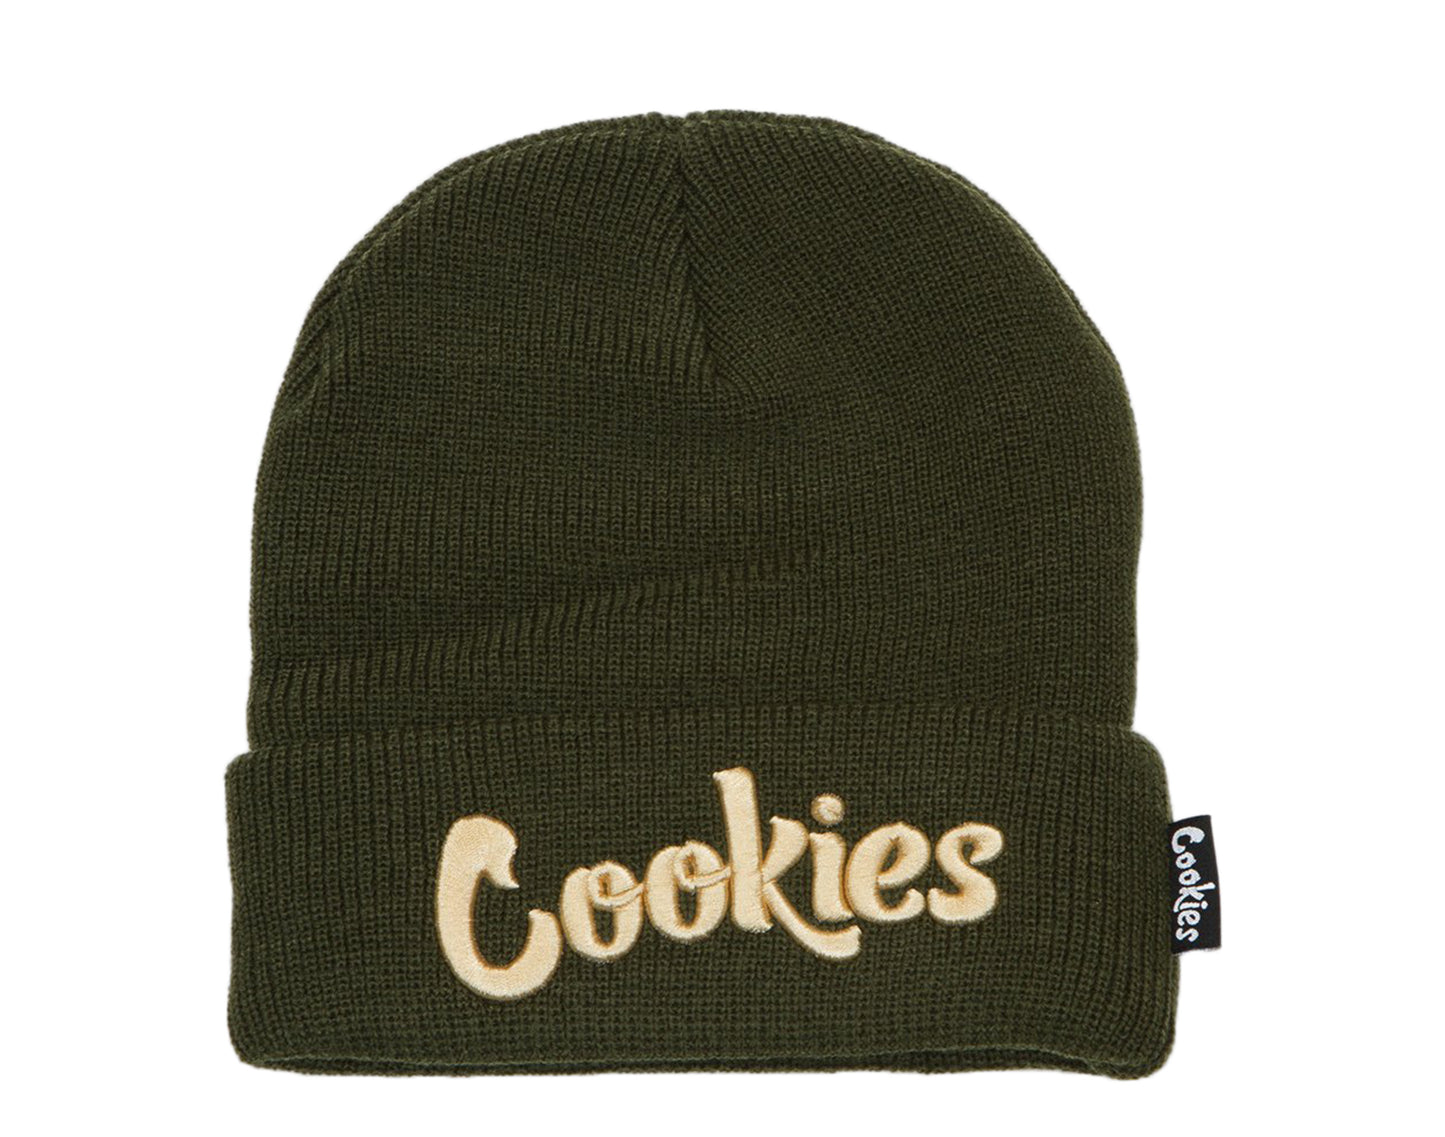 Cookies Original Logo Thin Mint Knit Beanie Olive/Cream Men's Hat 1538X3496-OLC